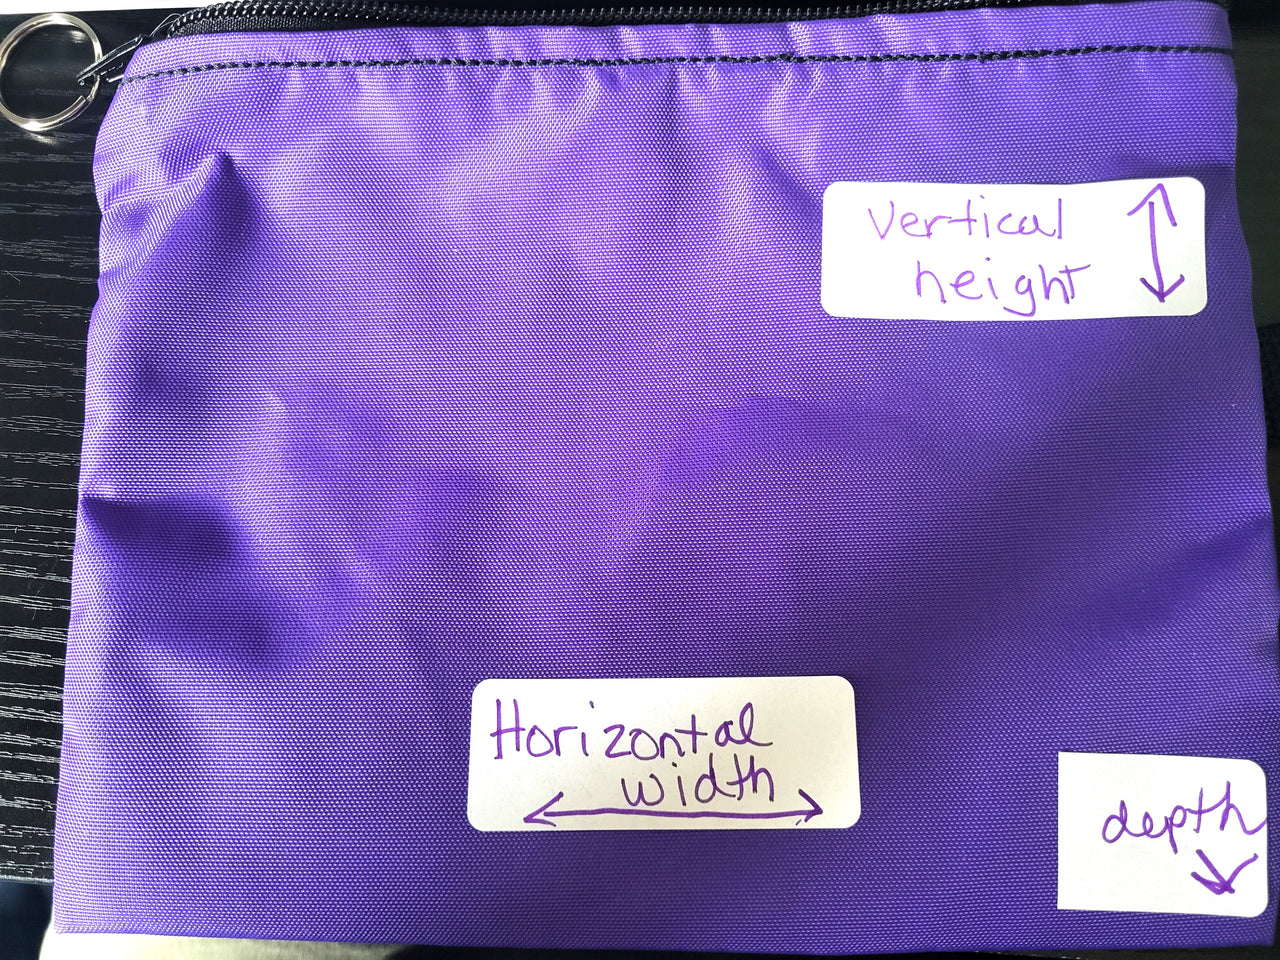 Inhaler cases carriers small size embroidered medical alert label medication holders